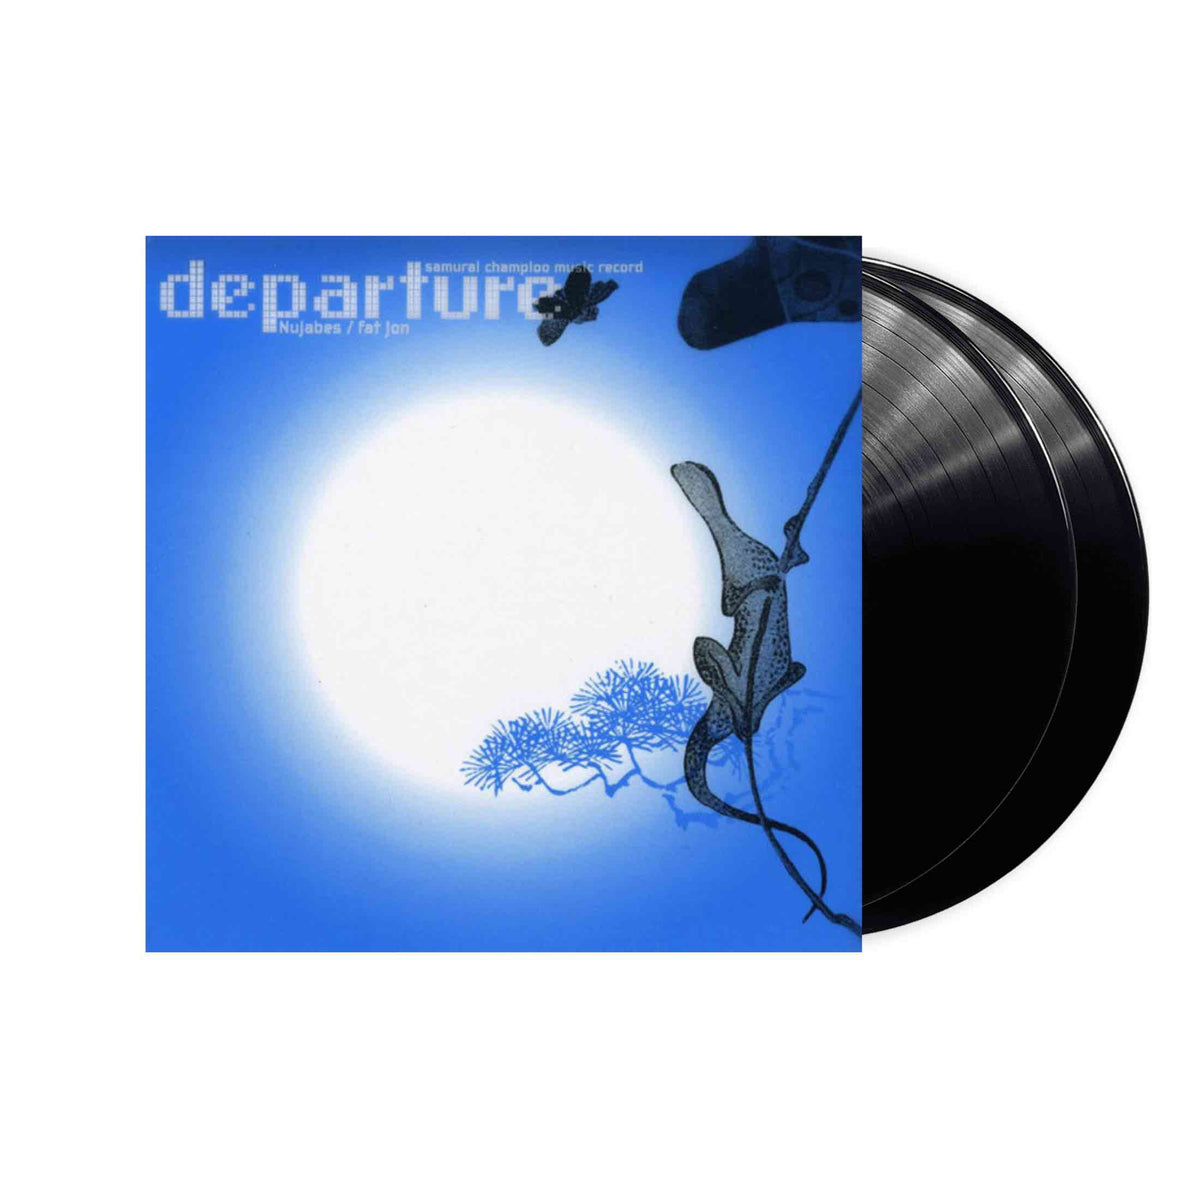 nujabes fat jon departure 2lp レコード - 邦楽